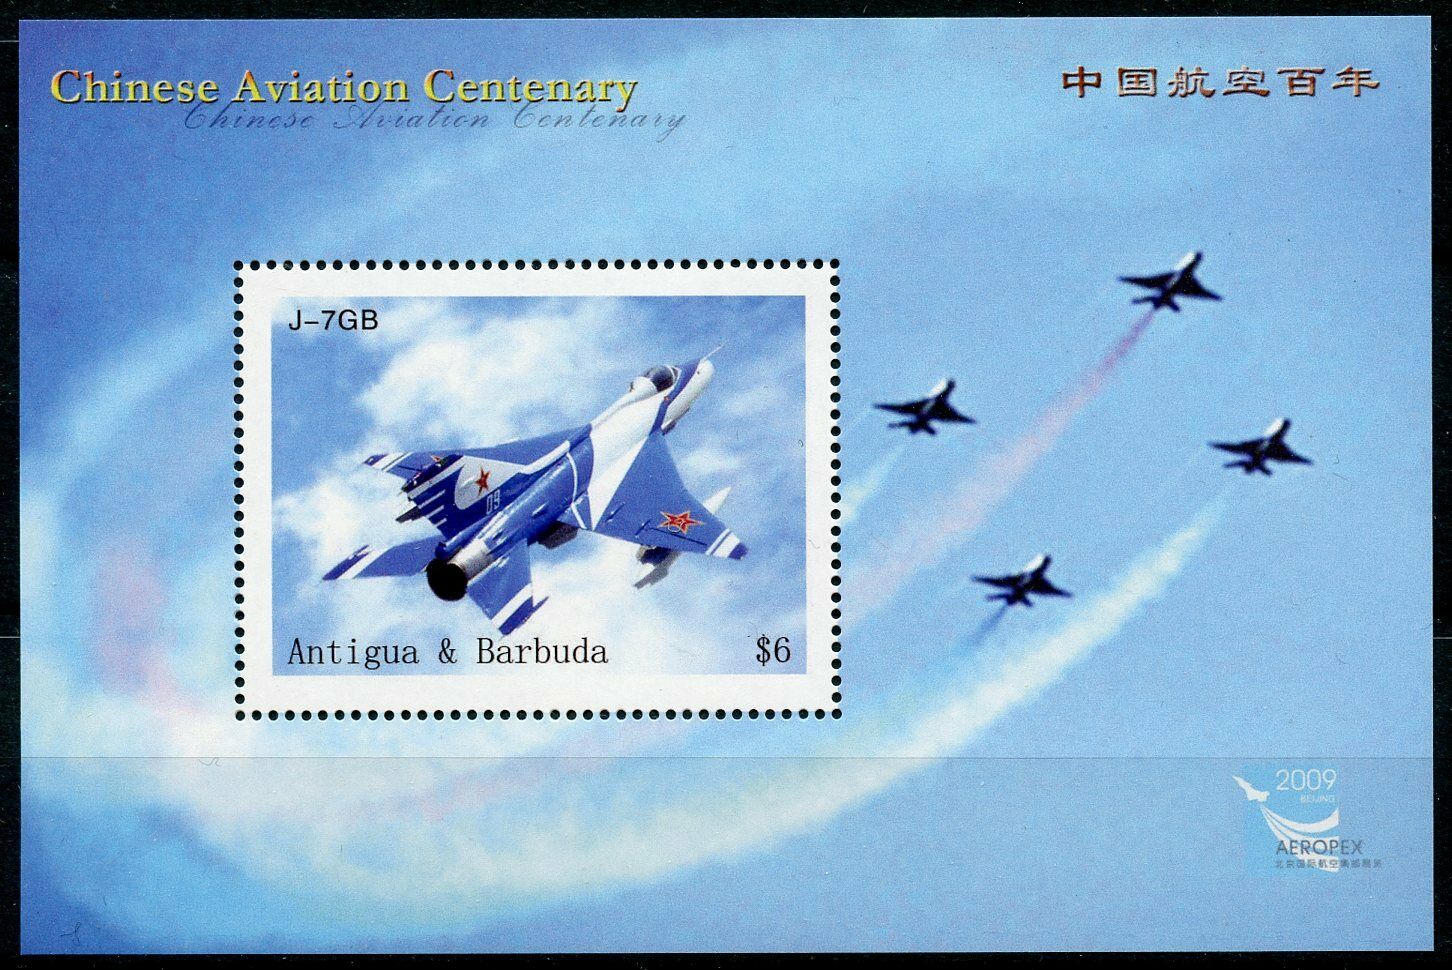 Antigua & Barbuda 2009 MNH Chinese Aviation Cent Aeropex 1v S/S Military Stamps